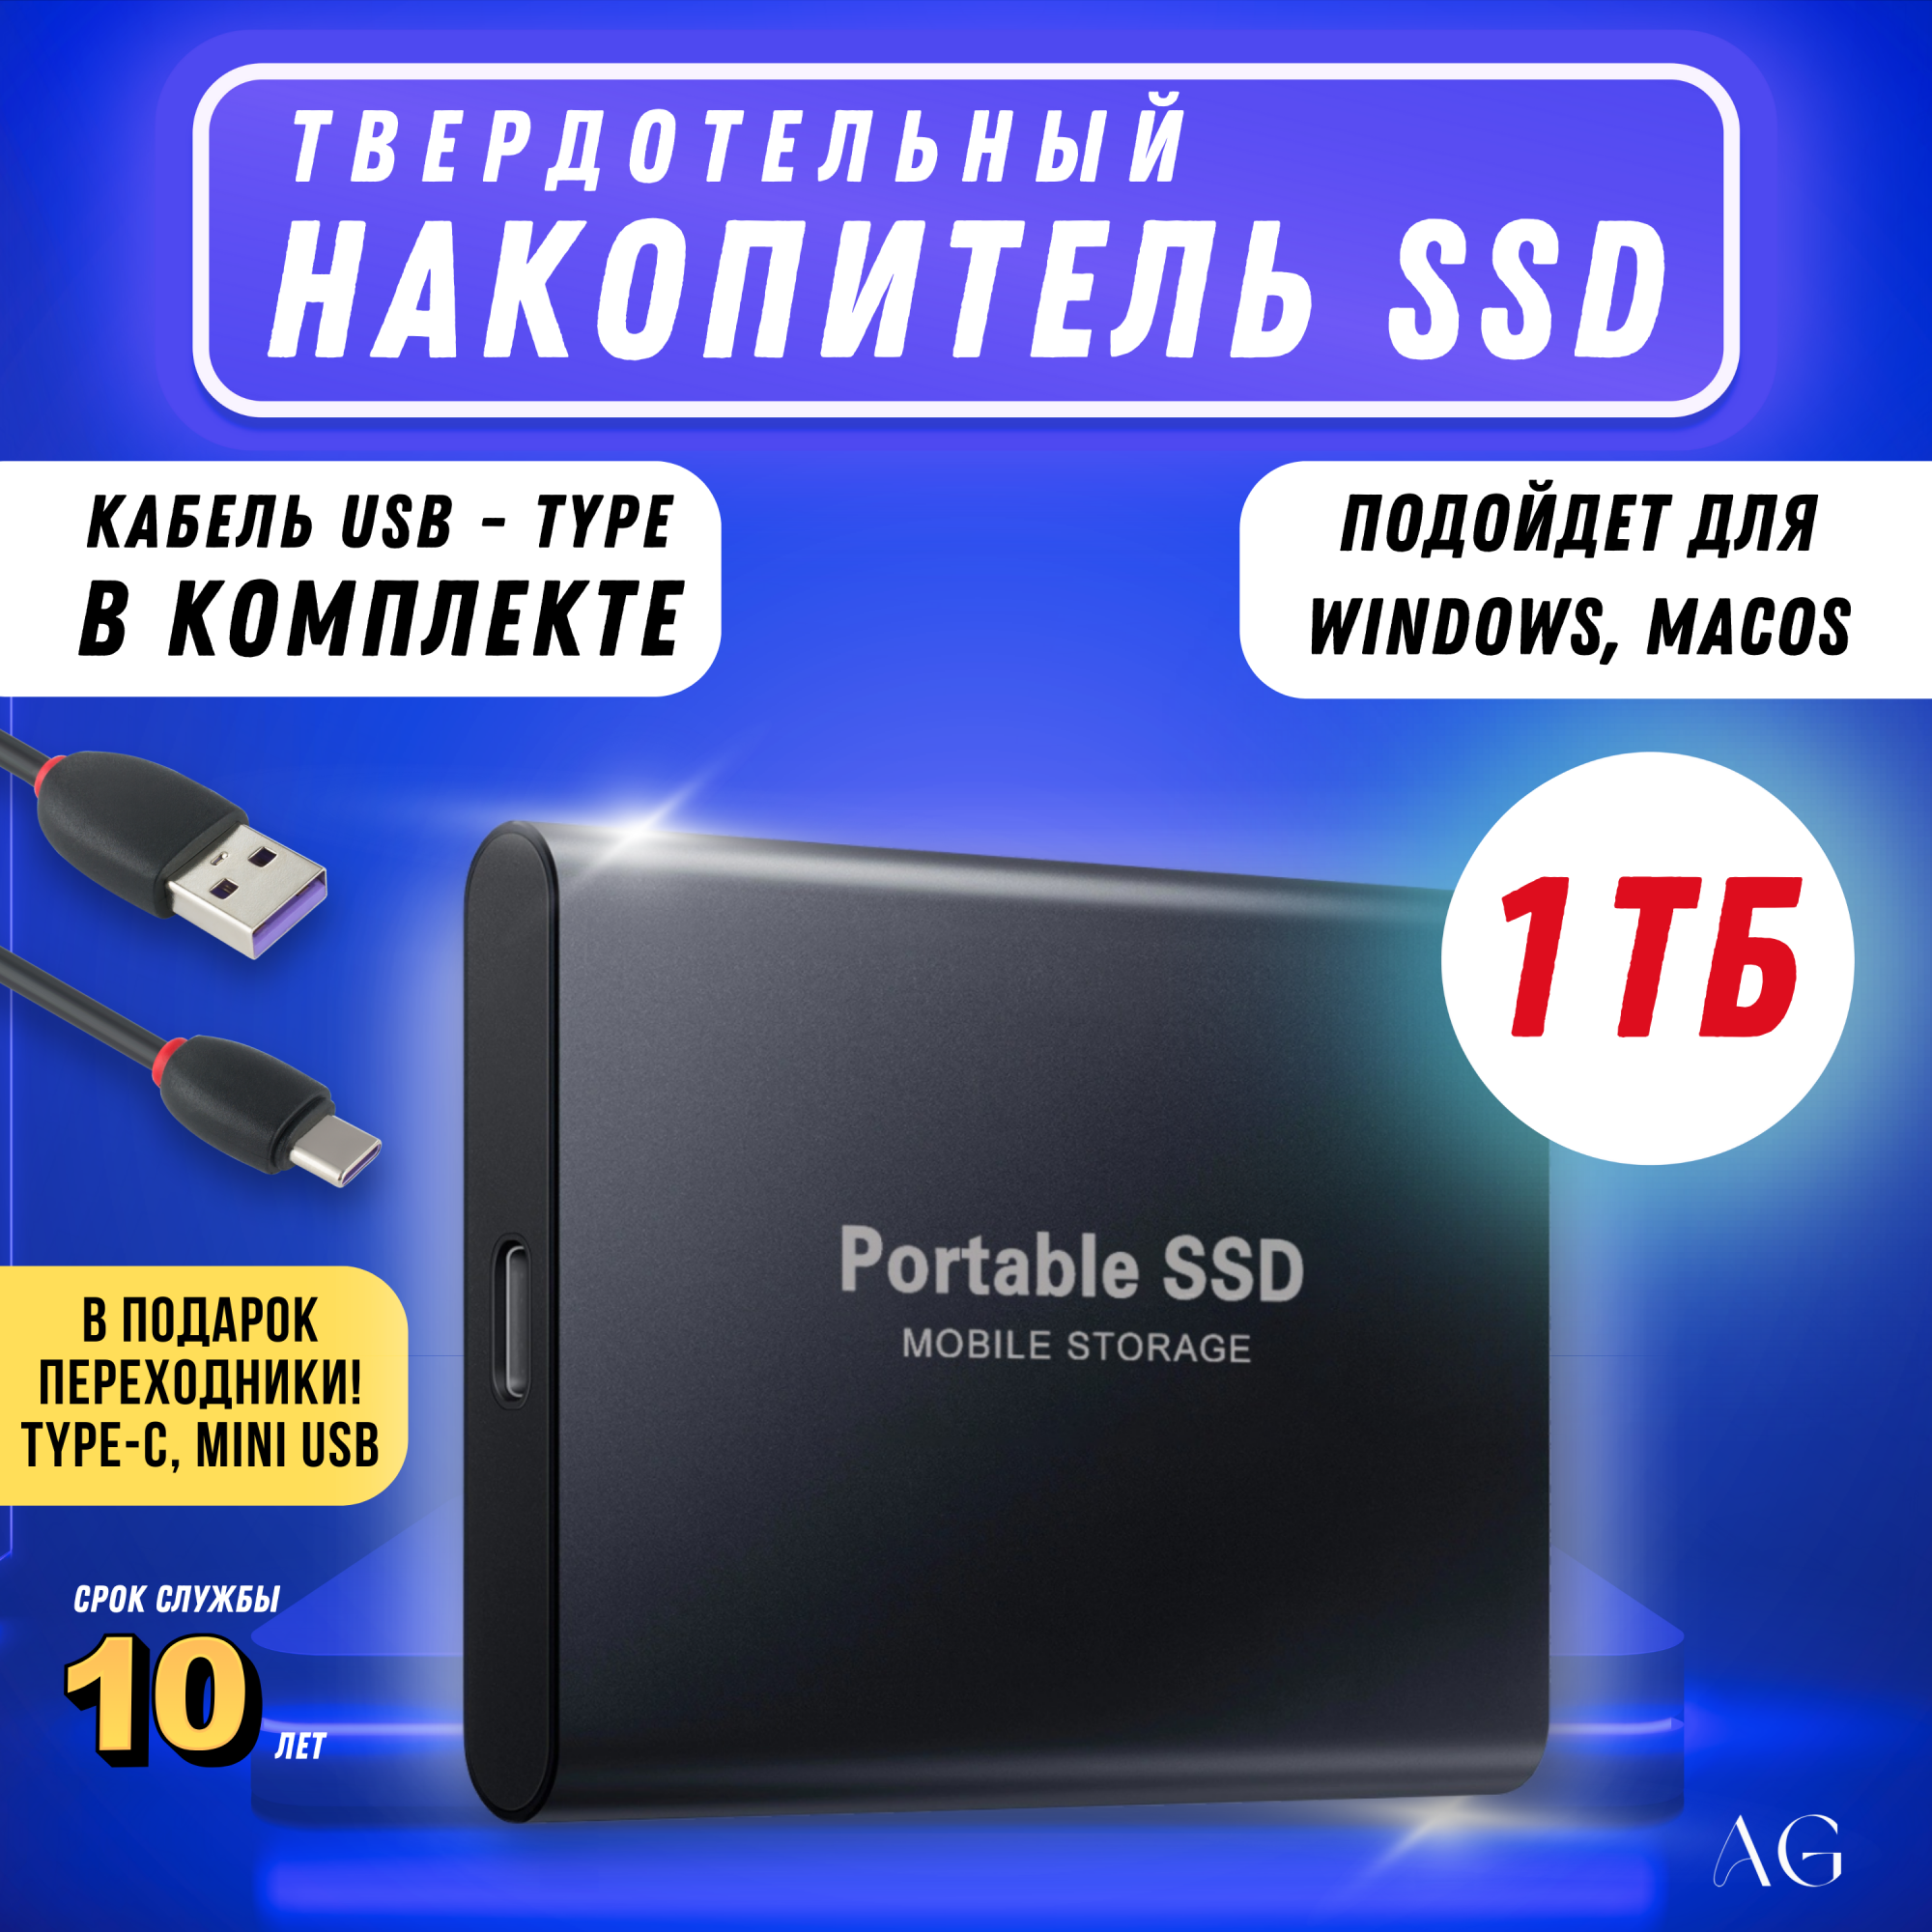 Внешний диск SSD AG Digital, 1TB – отзывы покупателей на маркетплейс Мегамаркет | Артикул: 600018244479